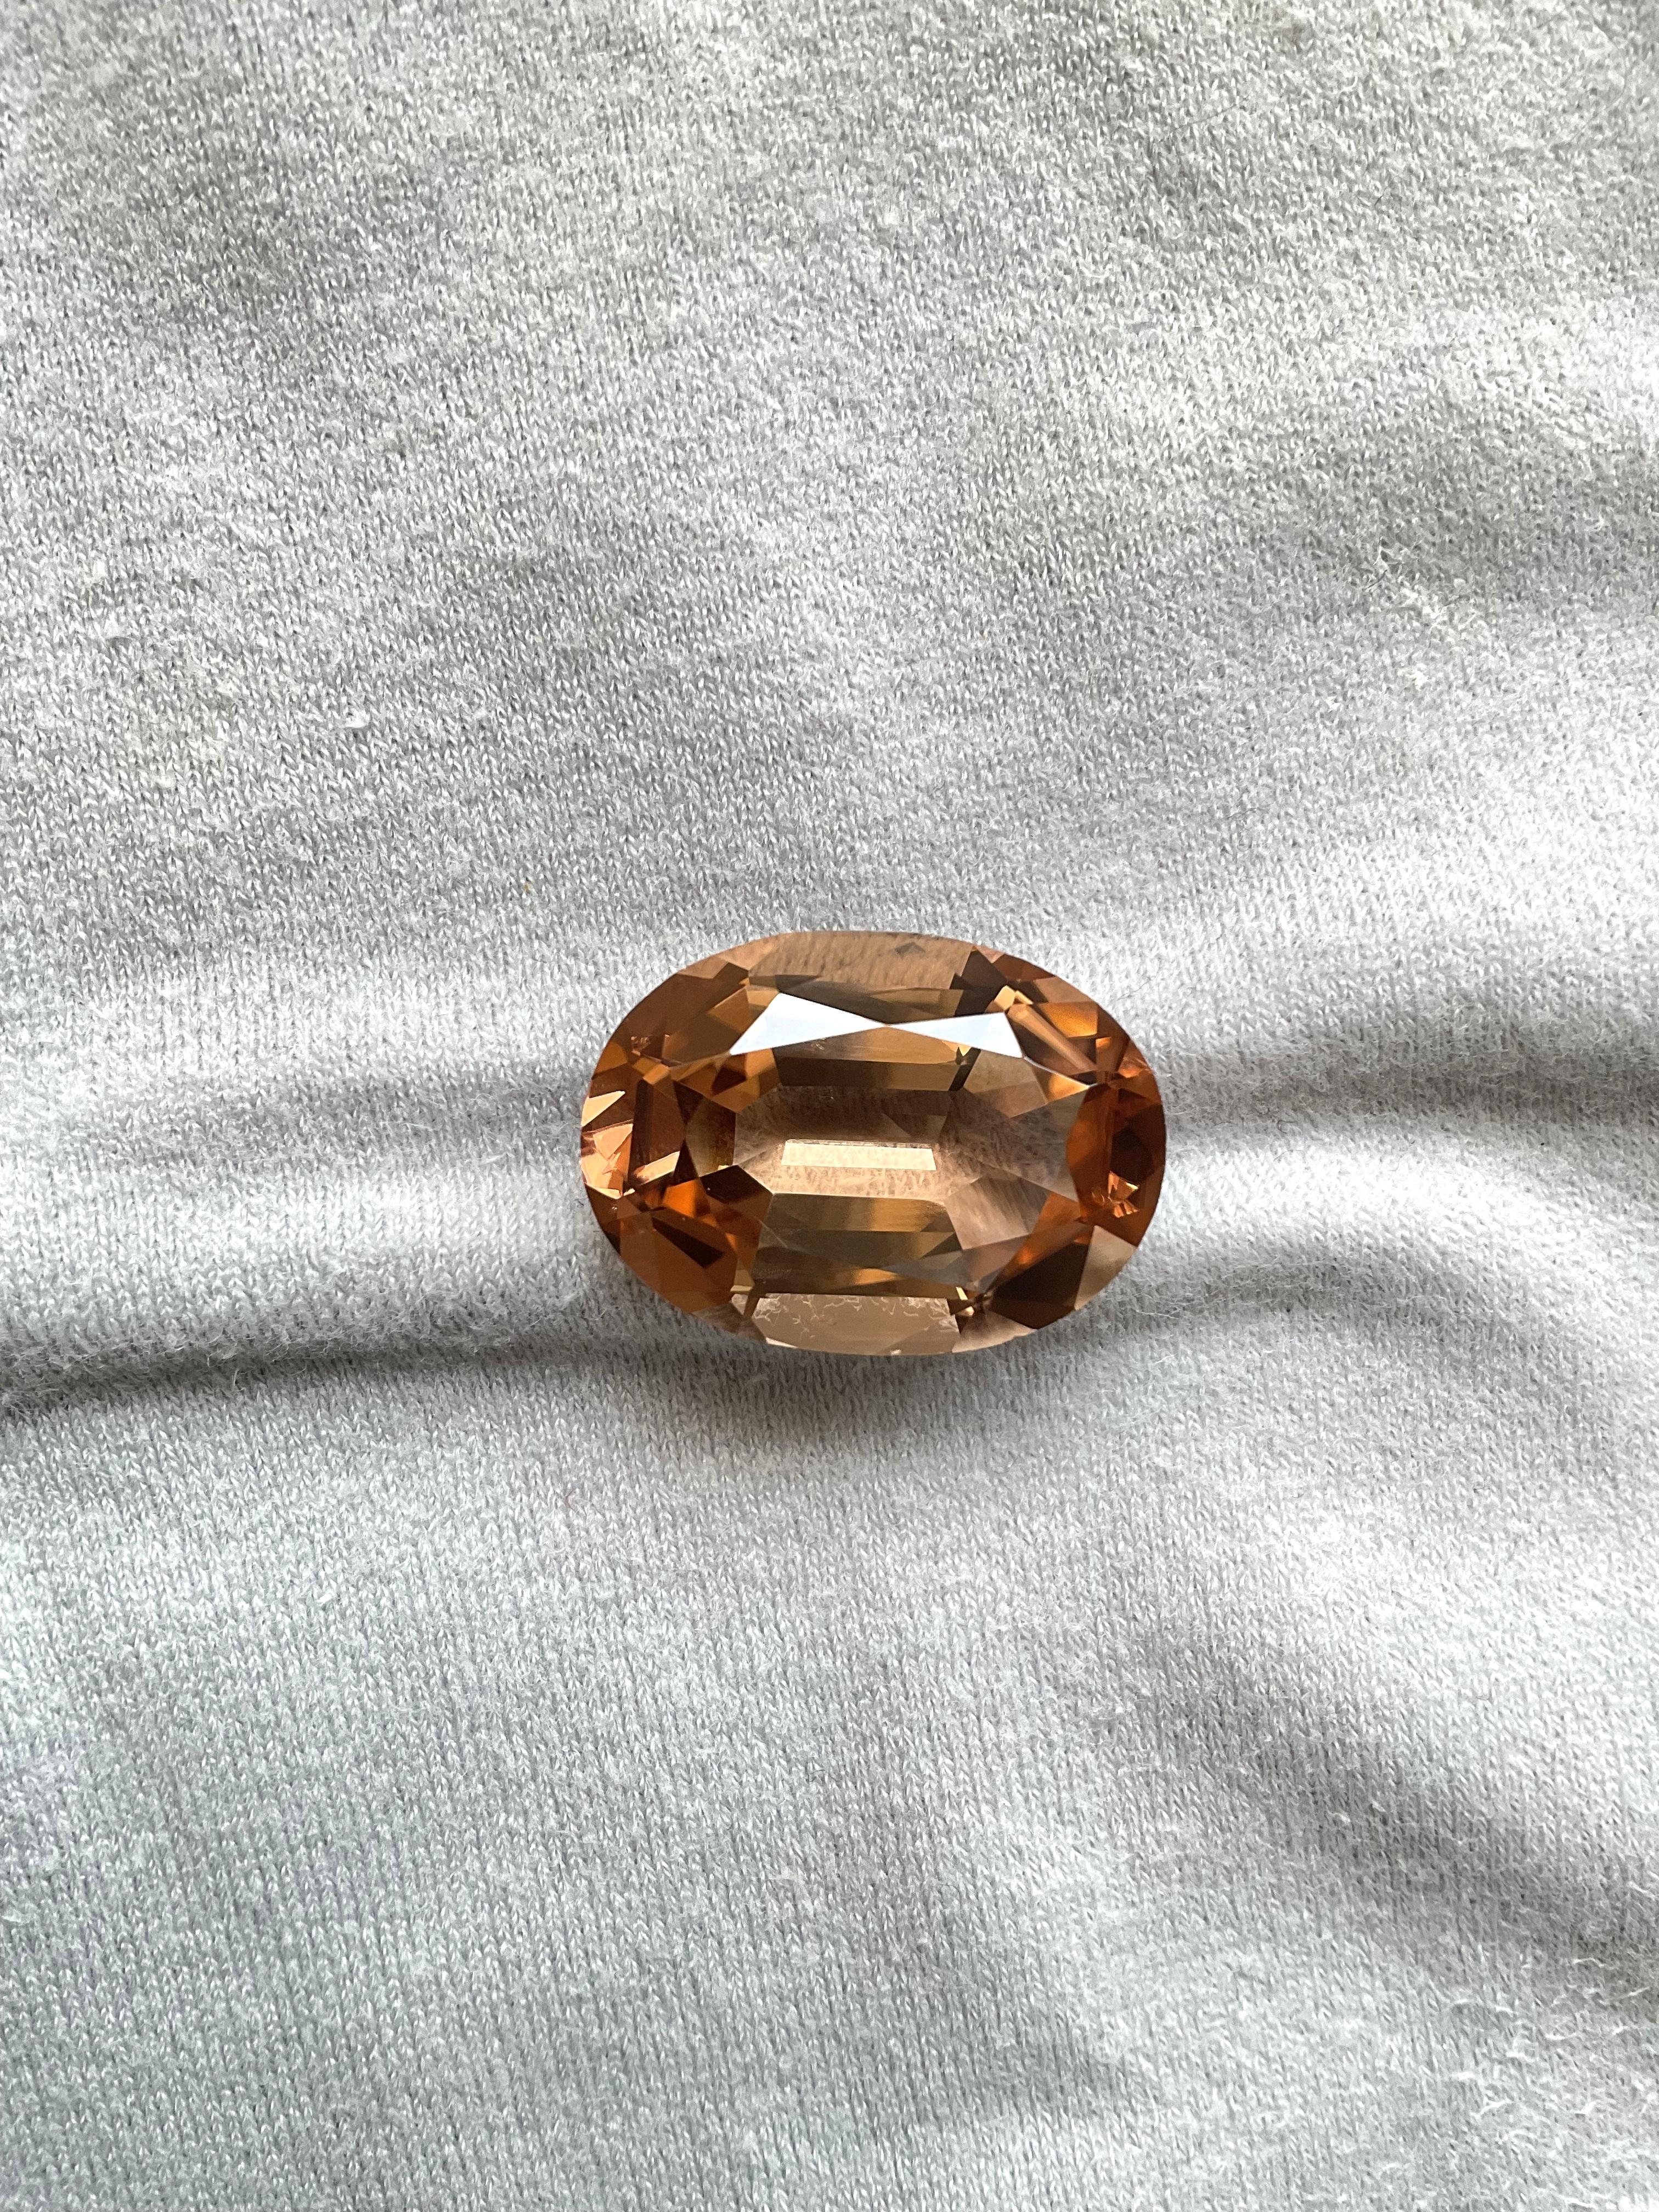 33.37 Carats Top Quality Tourmaline Oval Cut Stone Fine Jewelry Natural Gemstone Neuf - En vente à Jaipur, RJ